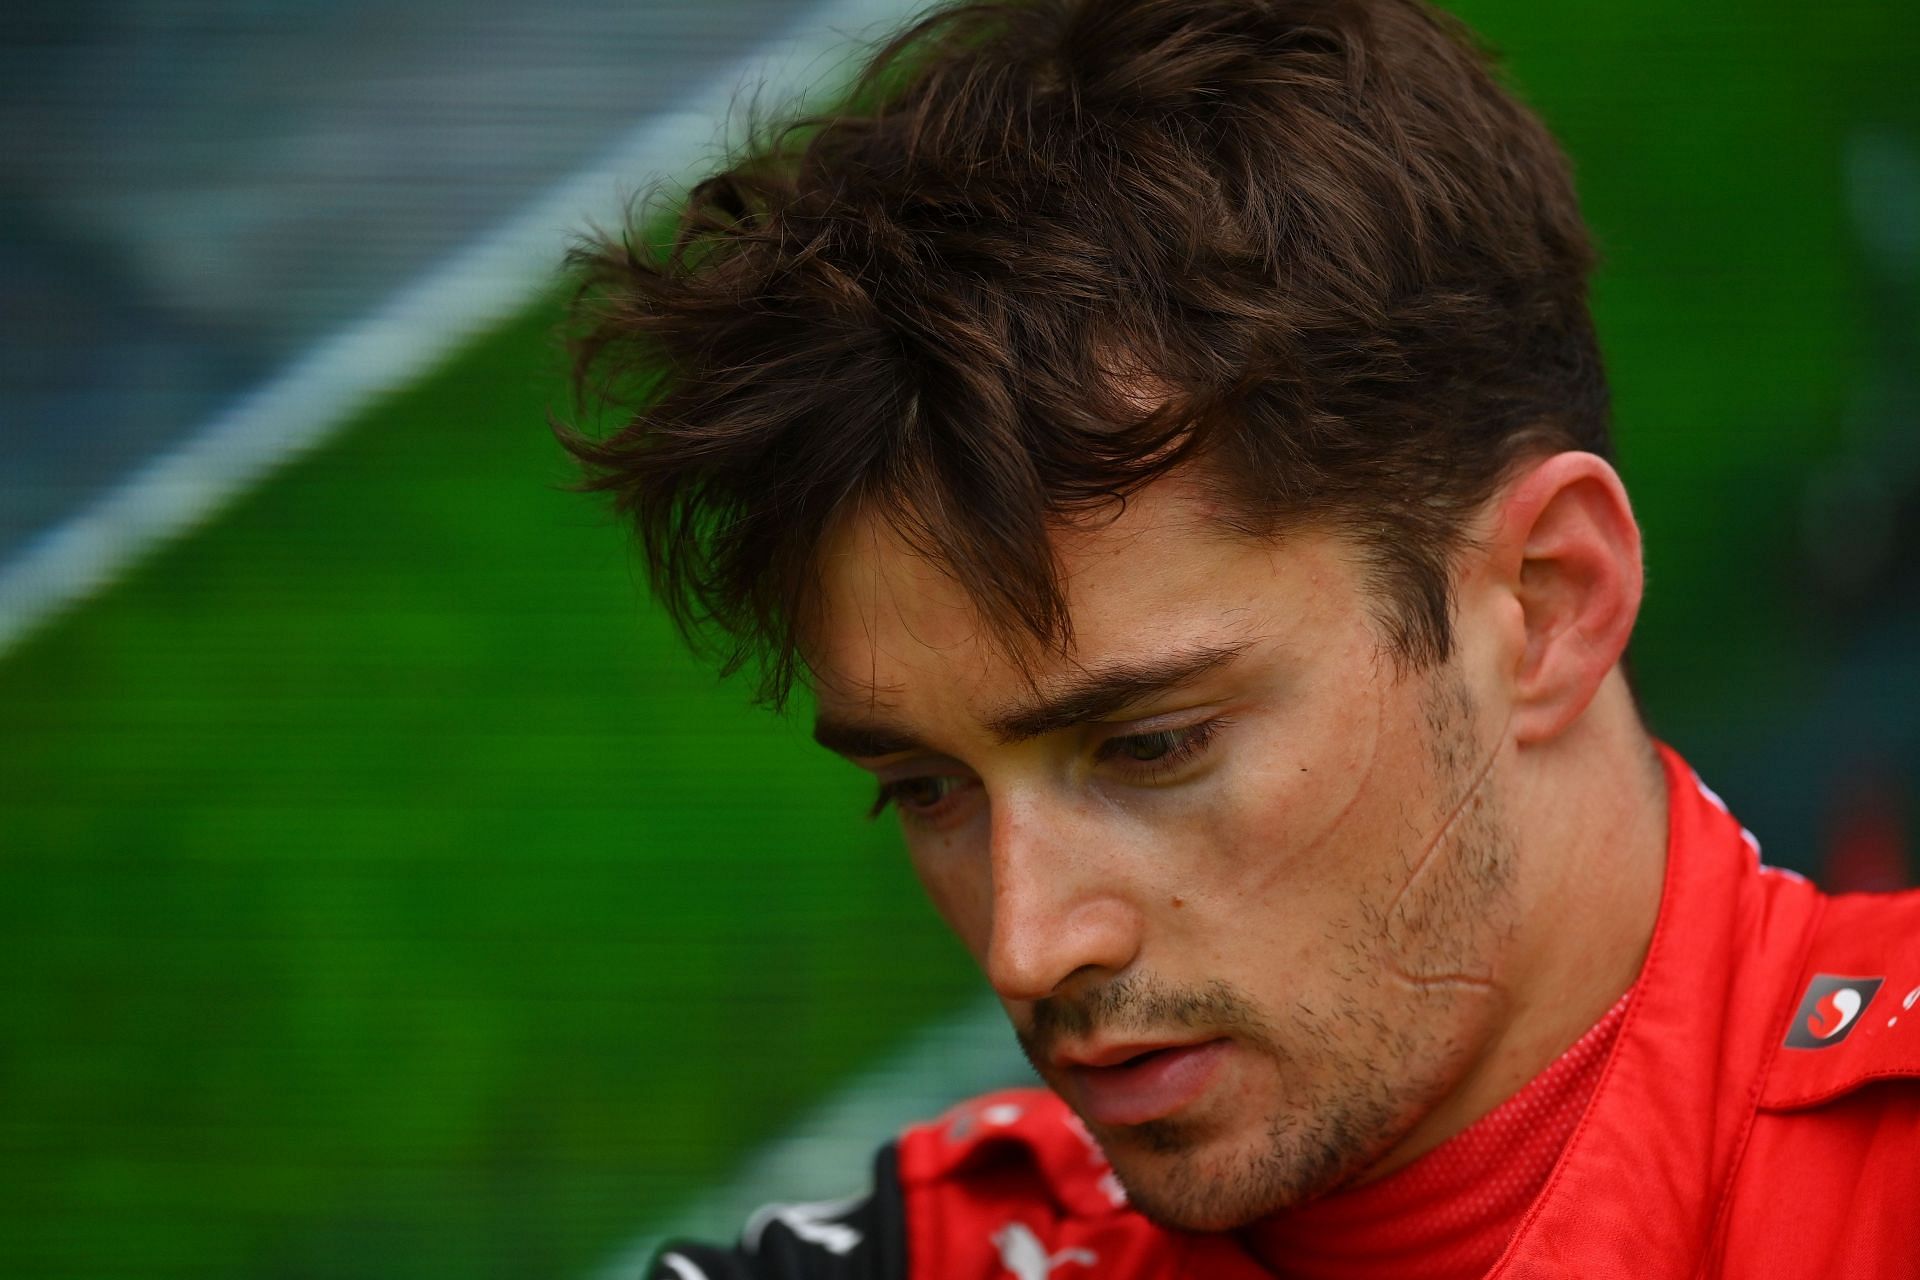 Charles Leclerc at the F1 Grand Prix of Emilia Romagna